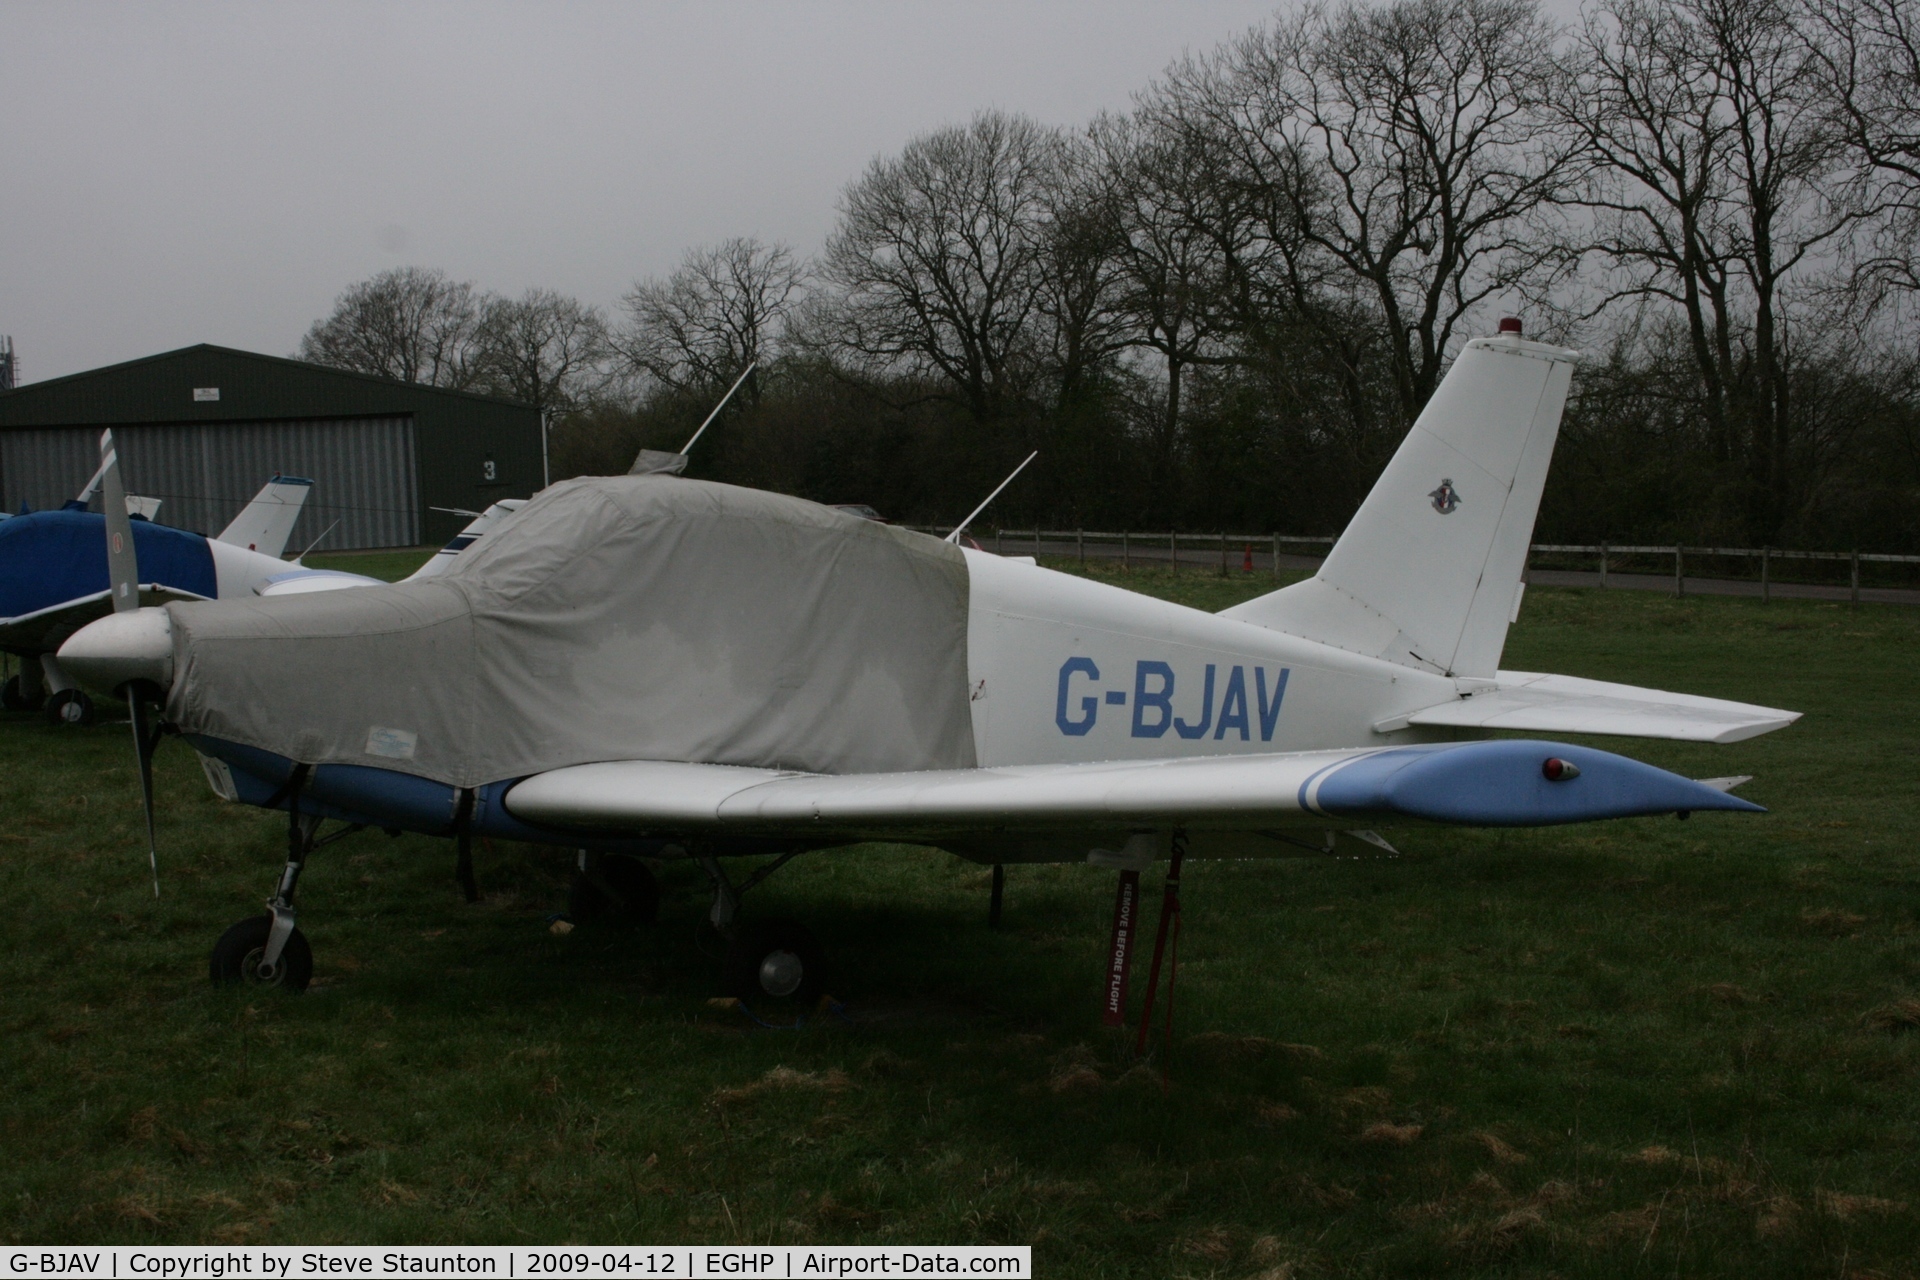 G-BJAV, 1963 Gardan GY-80-160 Horizon C/N 28, Taken at Popham Airfield, England on a gloomy April Sunday (12/04/09)